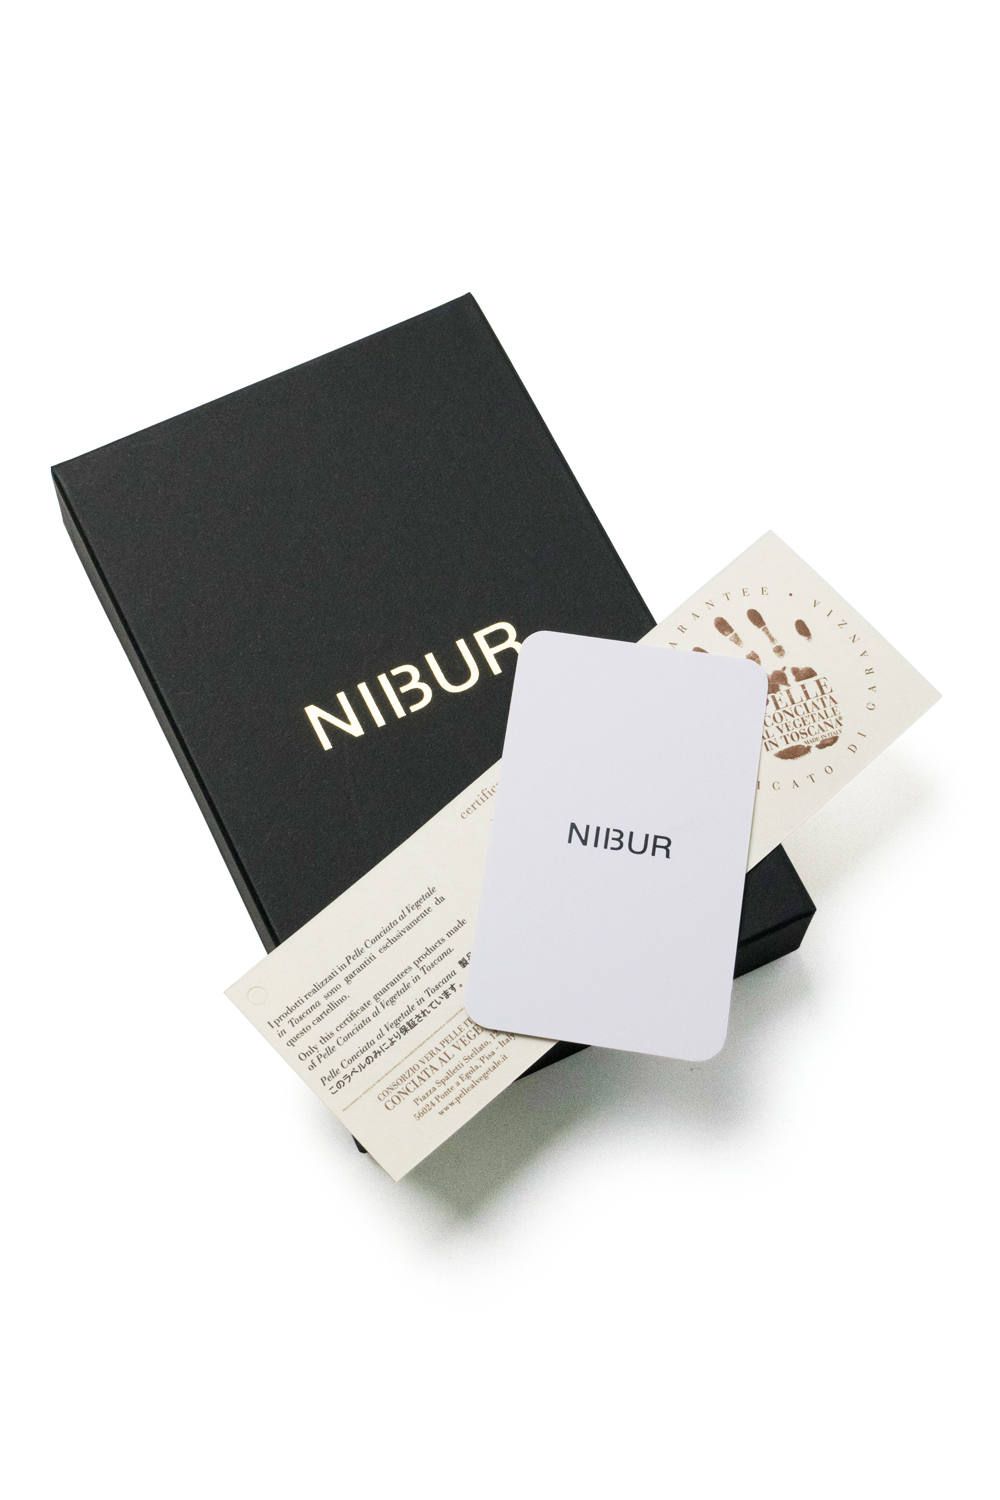 NIBUR - STARRY + - Card case [RED] / スターリー プラス - 七宝